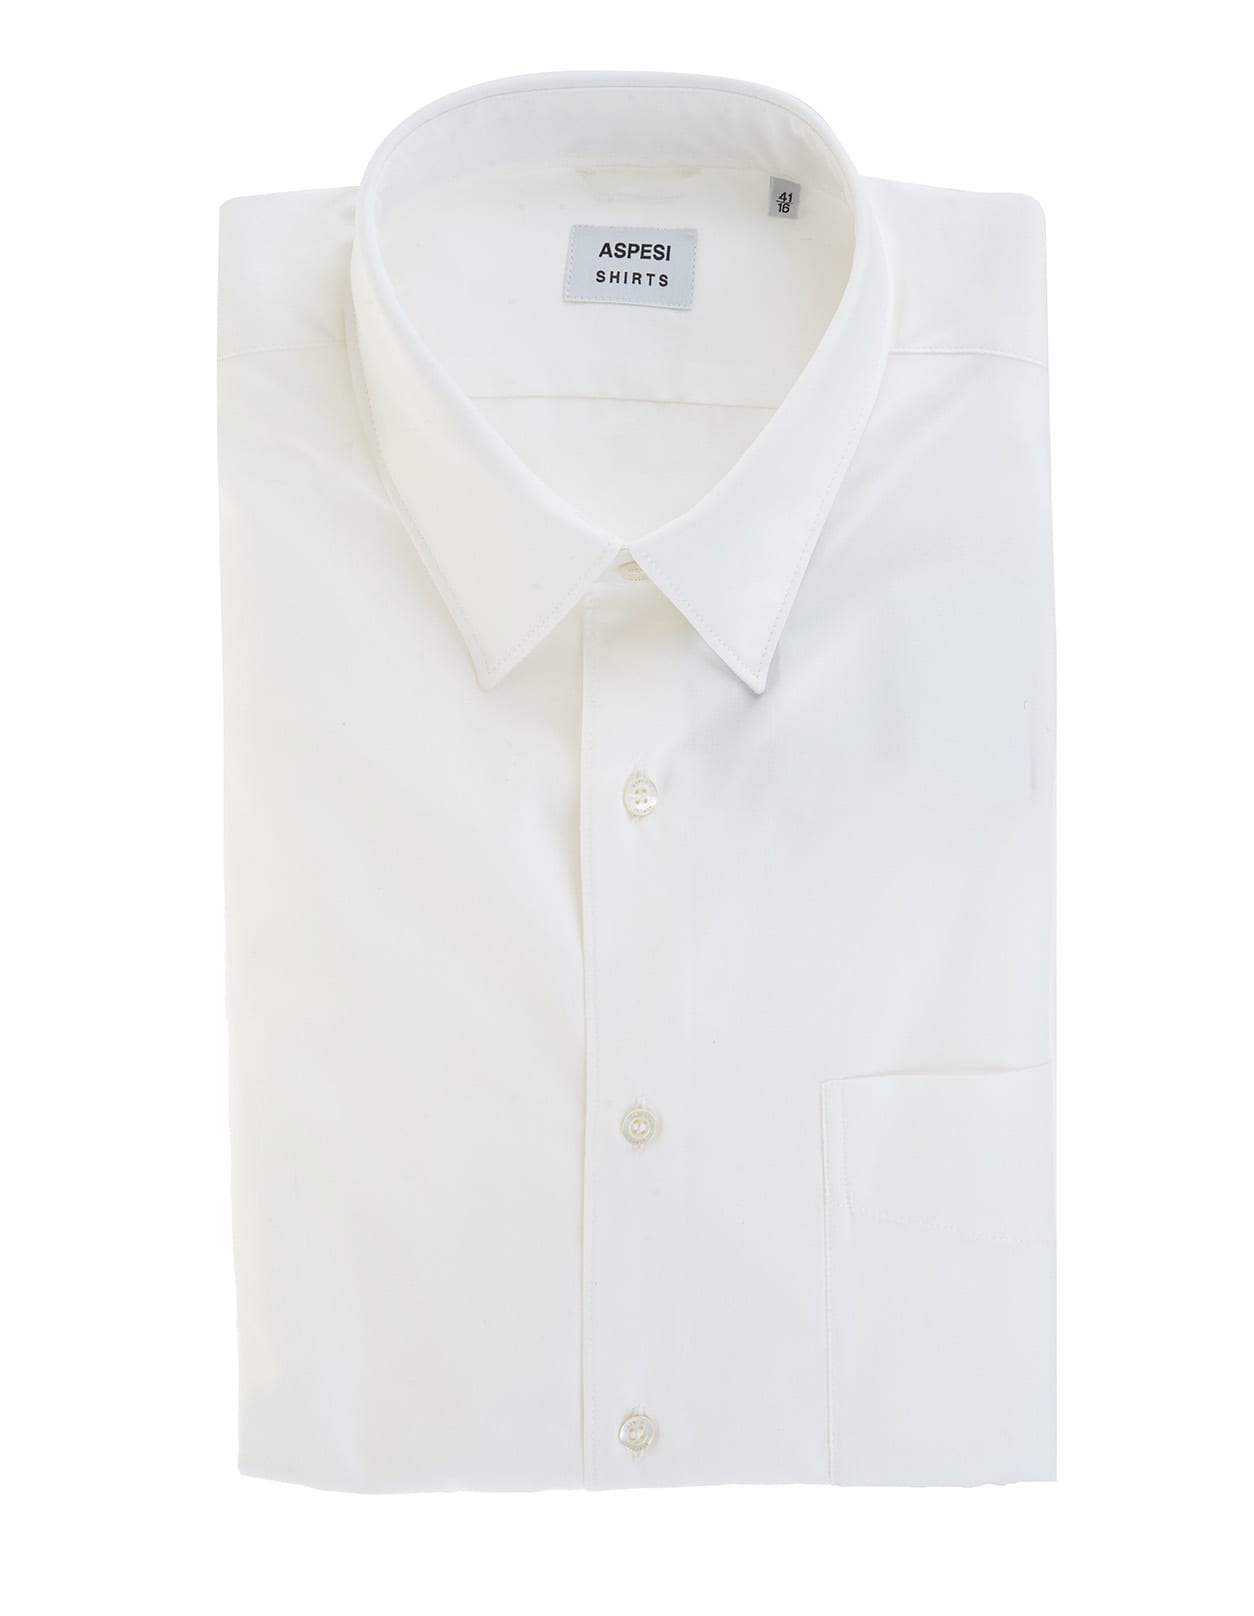 Aspesi Man Classic Shirt In White Cotton Poplin